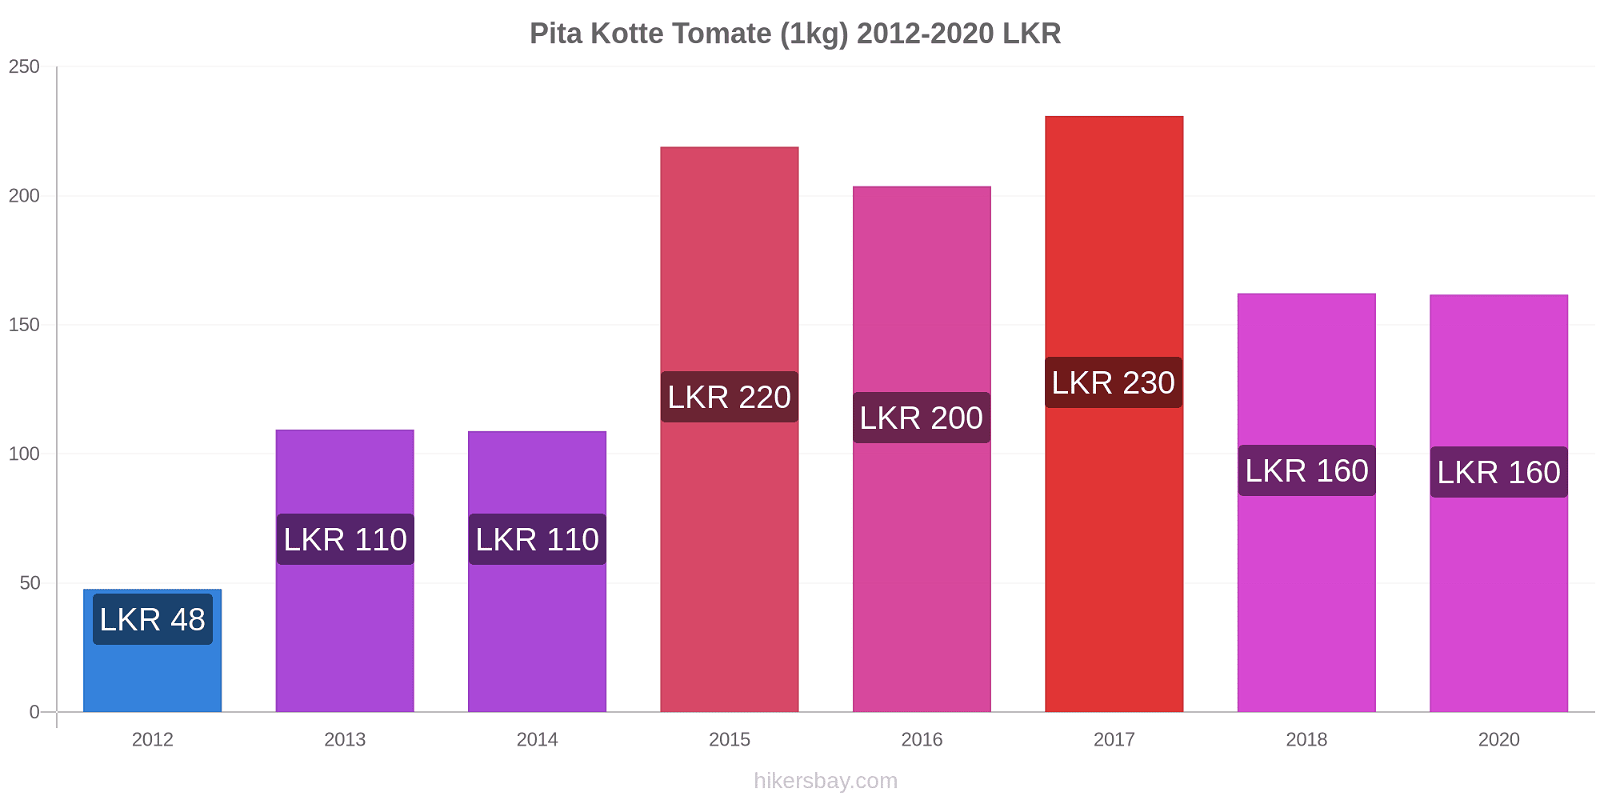 Pita Kotte modificări de preț Tomate (1kg) hikersbay.com